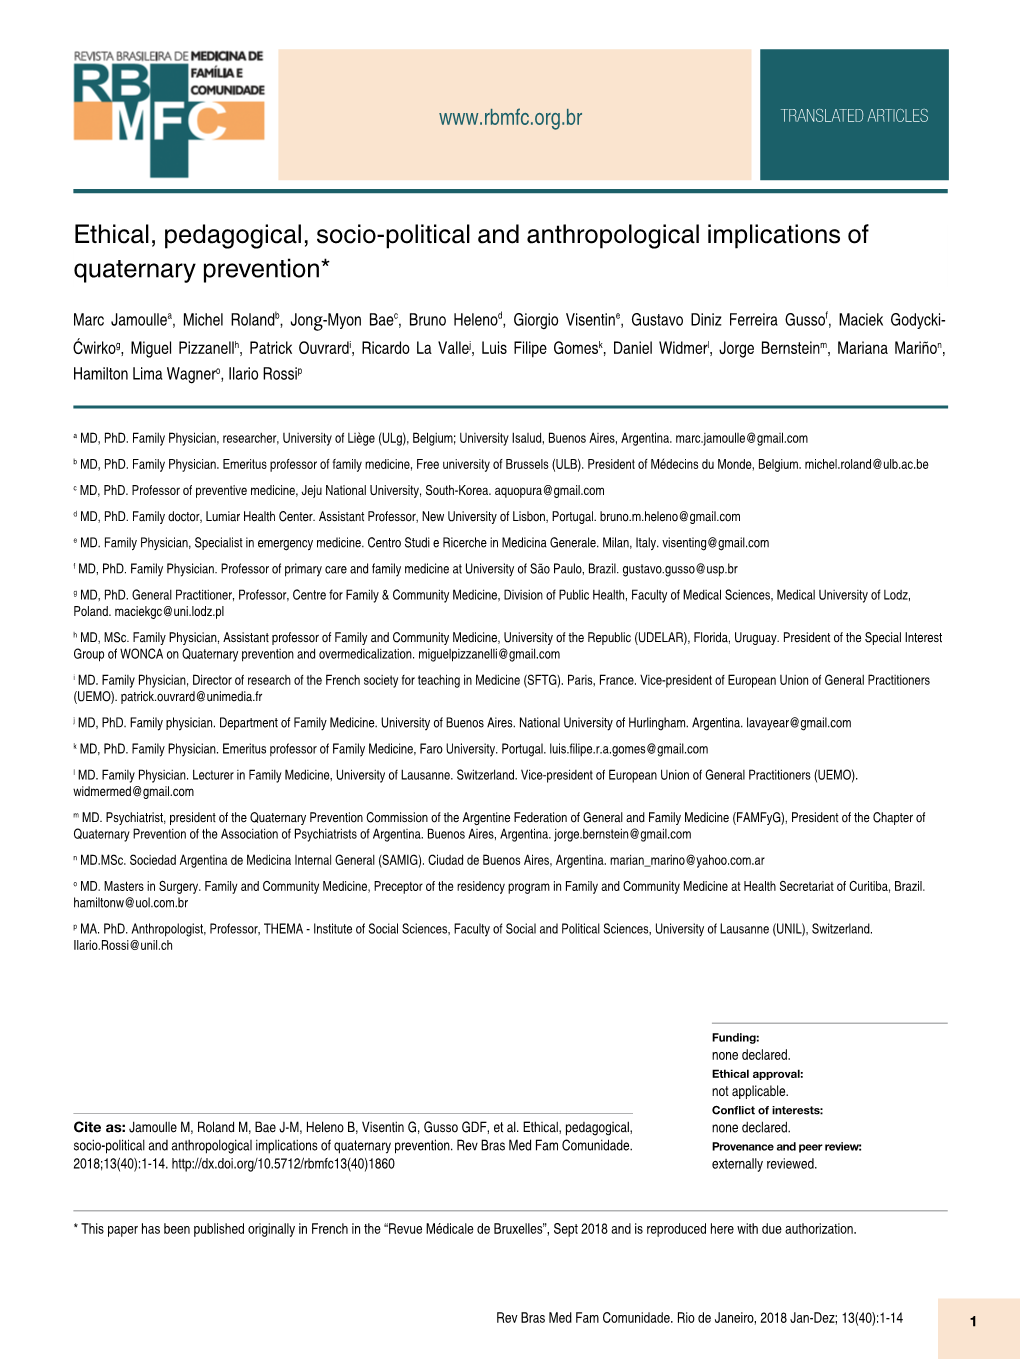 Ethical, Pedagogical, Socio-Political and Anthropological Implications of Quaternary Prevention*